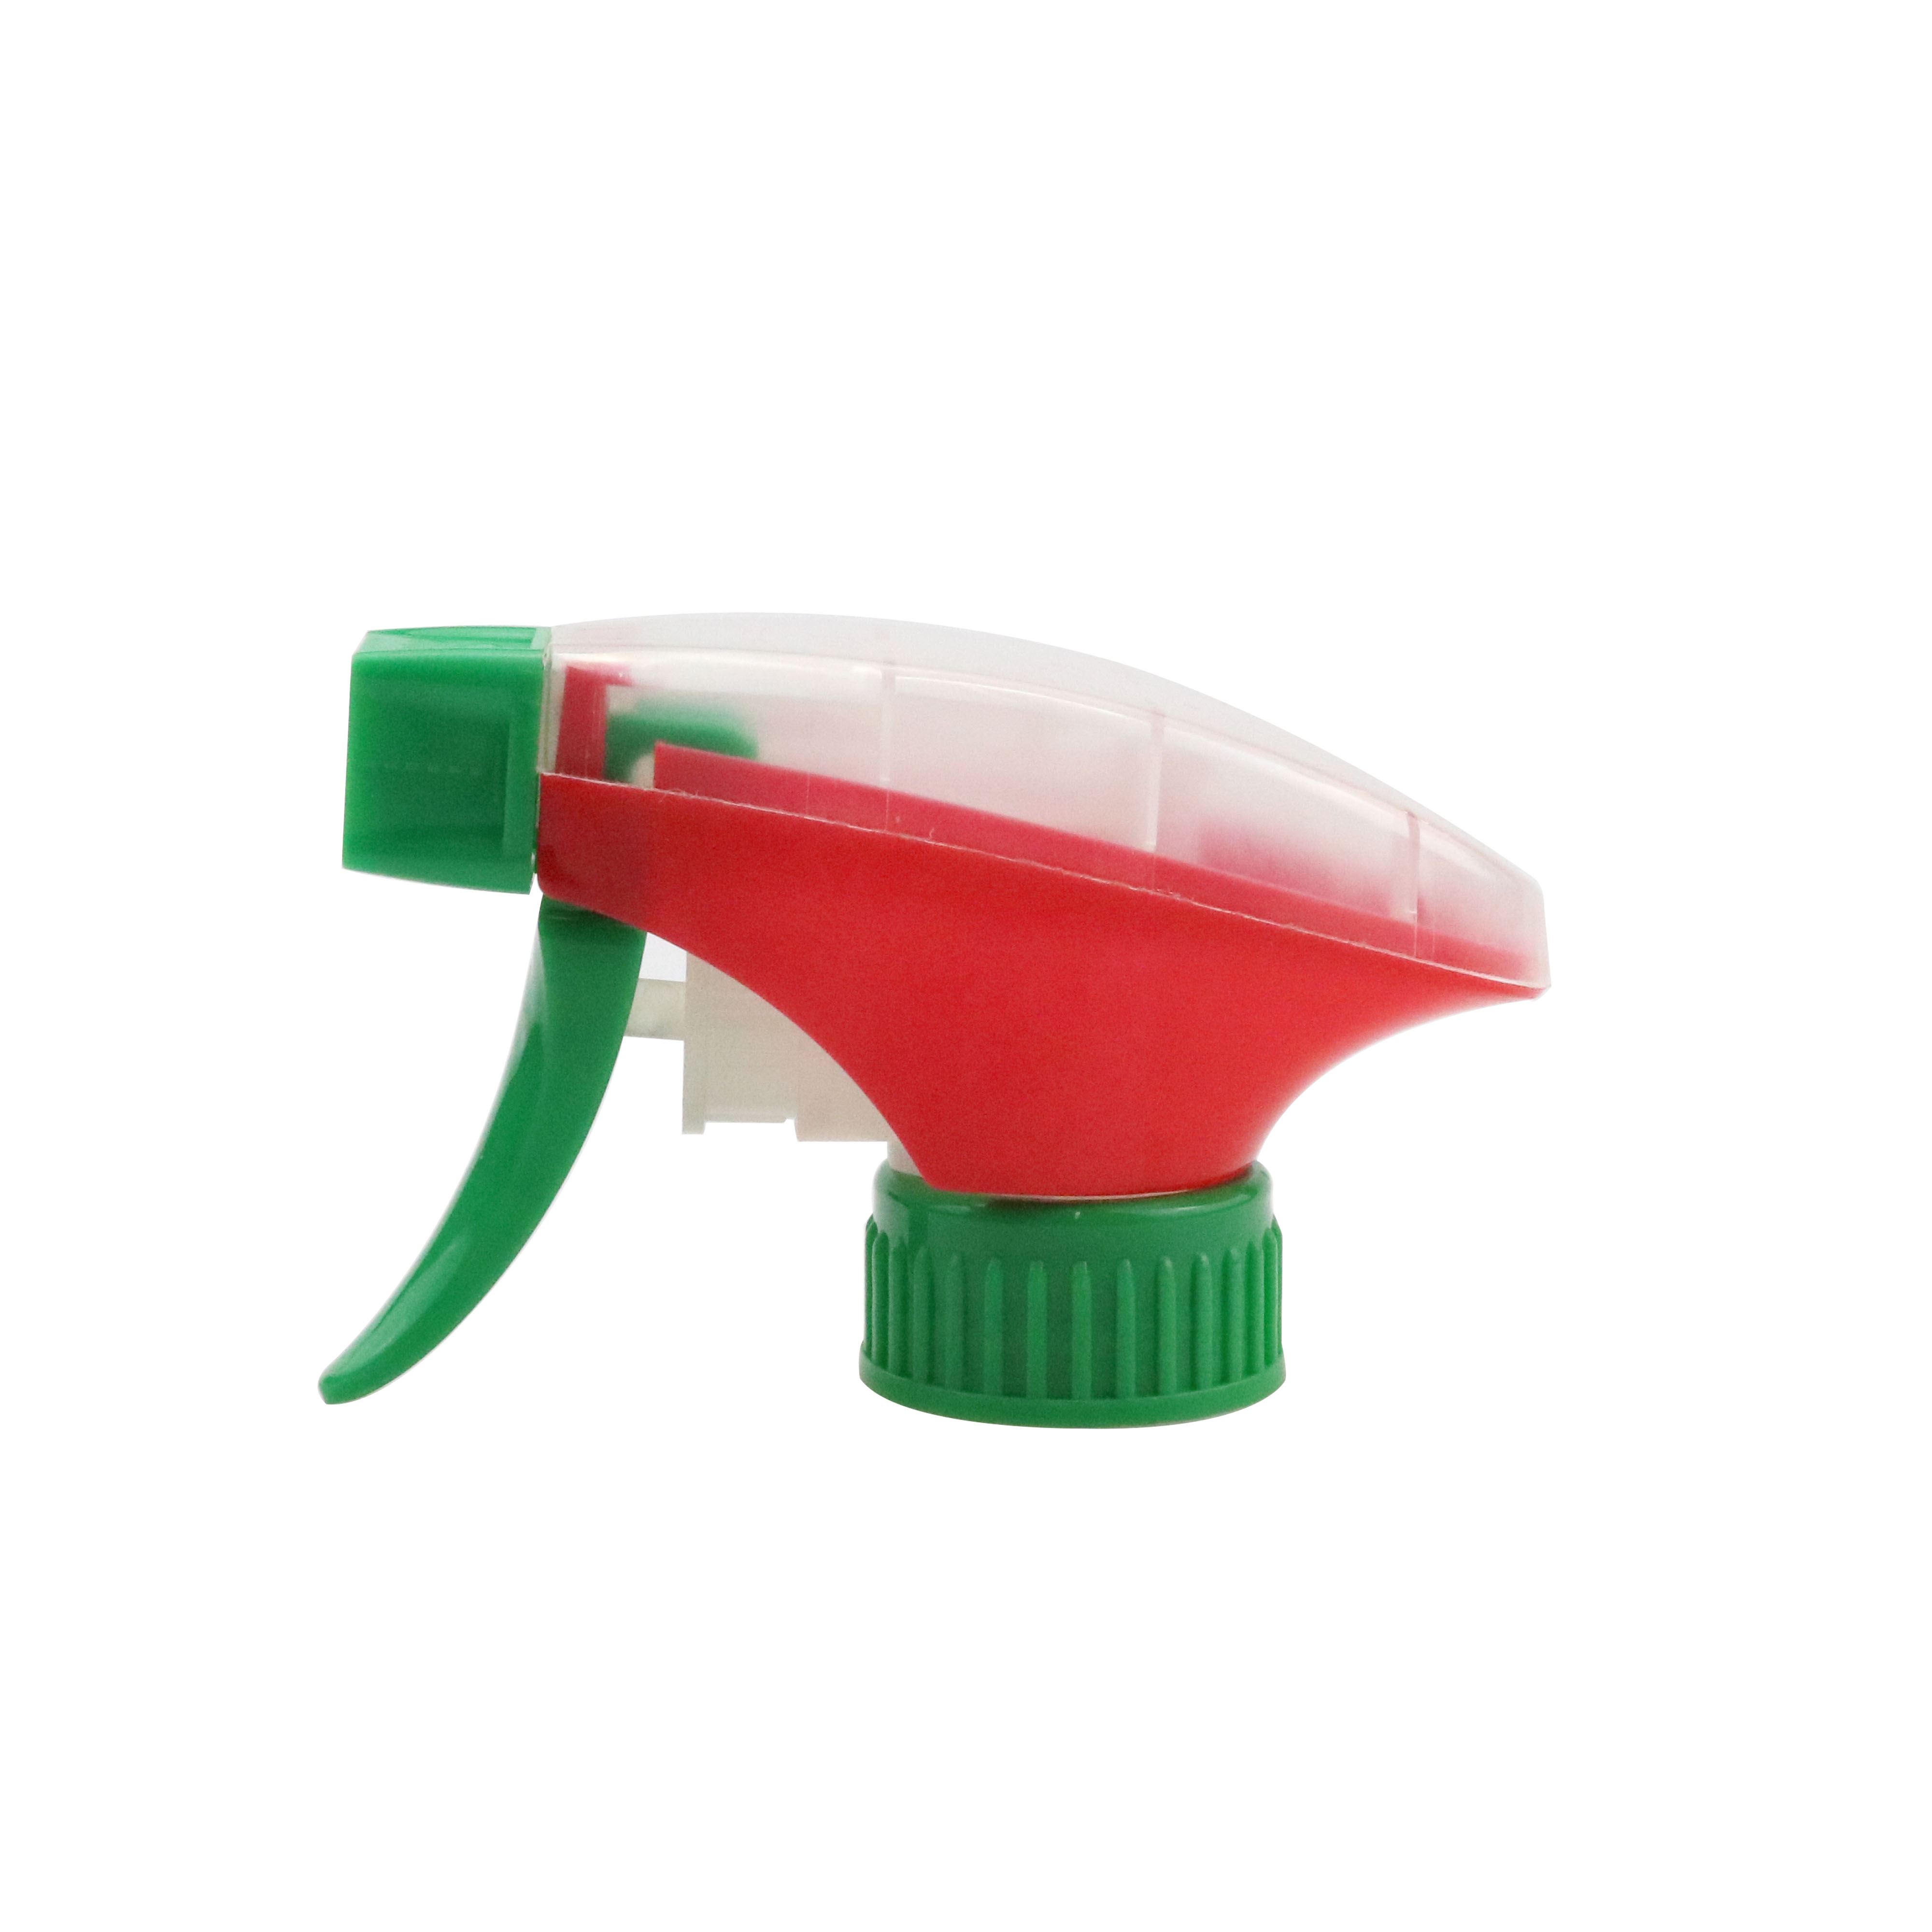 All Plastic Trigger Sprayer Mist Spray Stream With Pipes Fits 28mm Round Neck Bottles